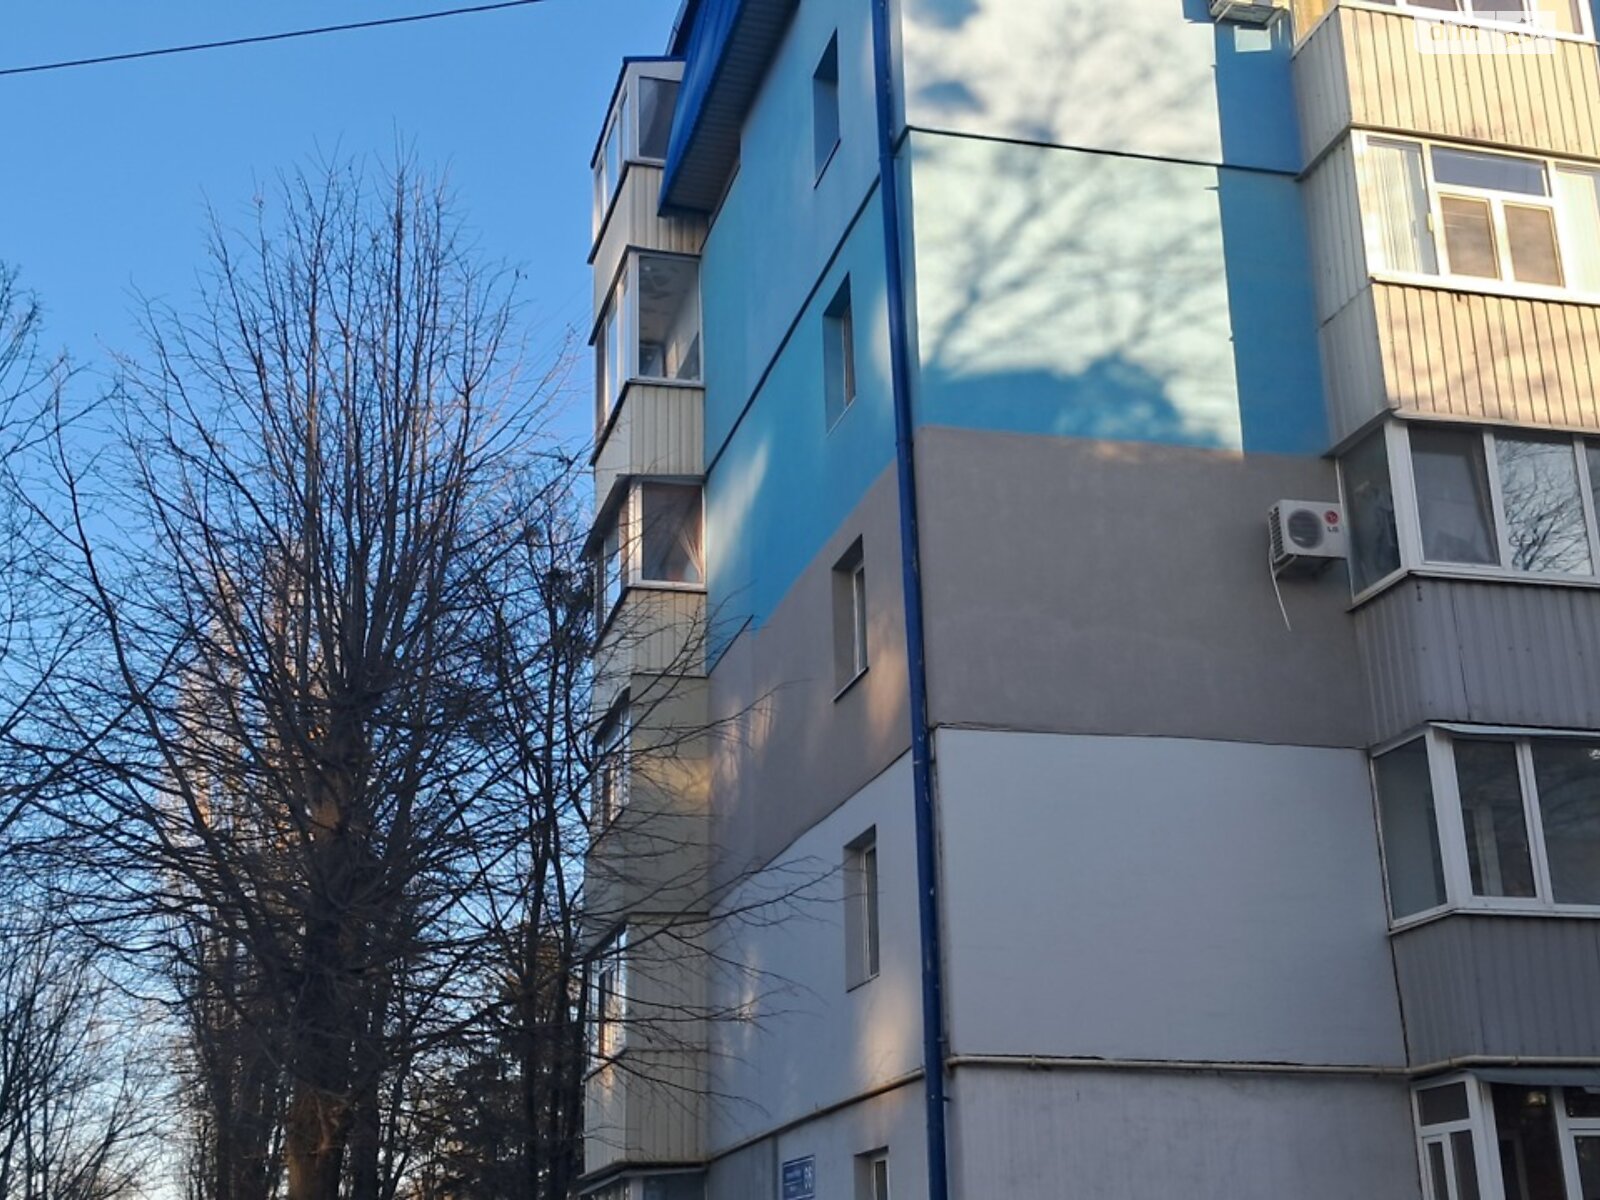 Продажа однокомнатной квартиры в Харькове, на ул. Мира 66, район ХТЗ фото 1